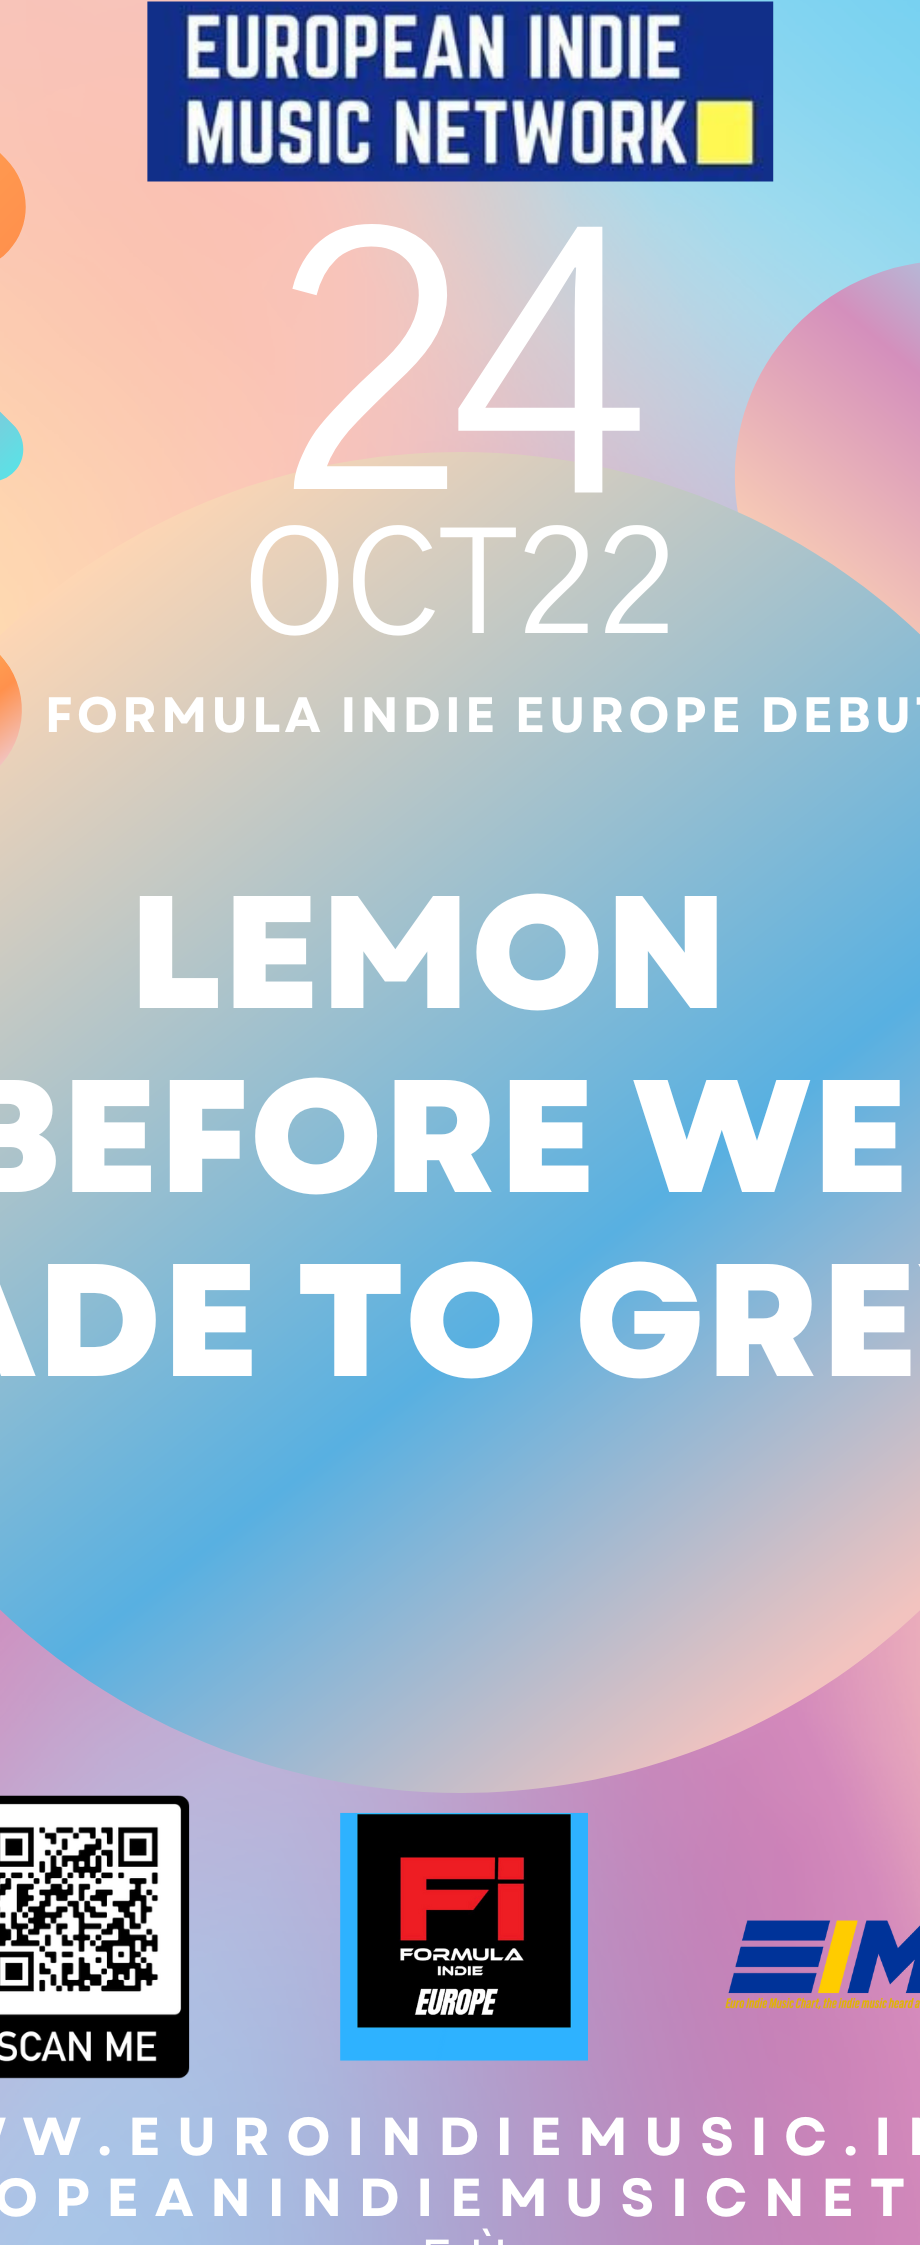 Lemon Amsterdam Before We Fade To Grey on Europe Indie